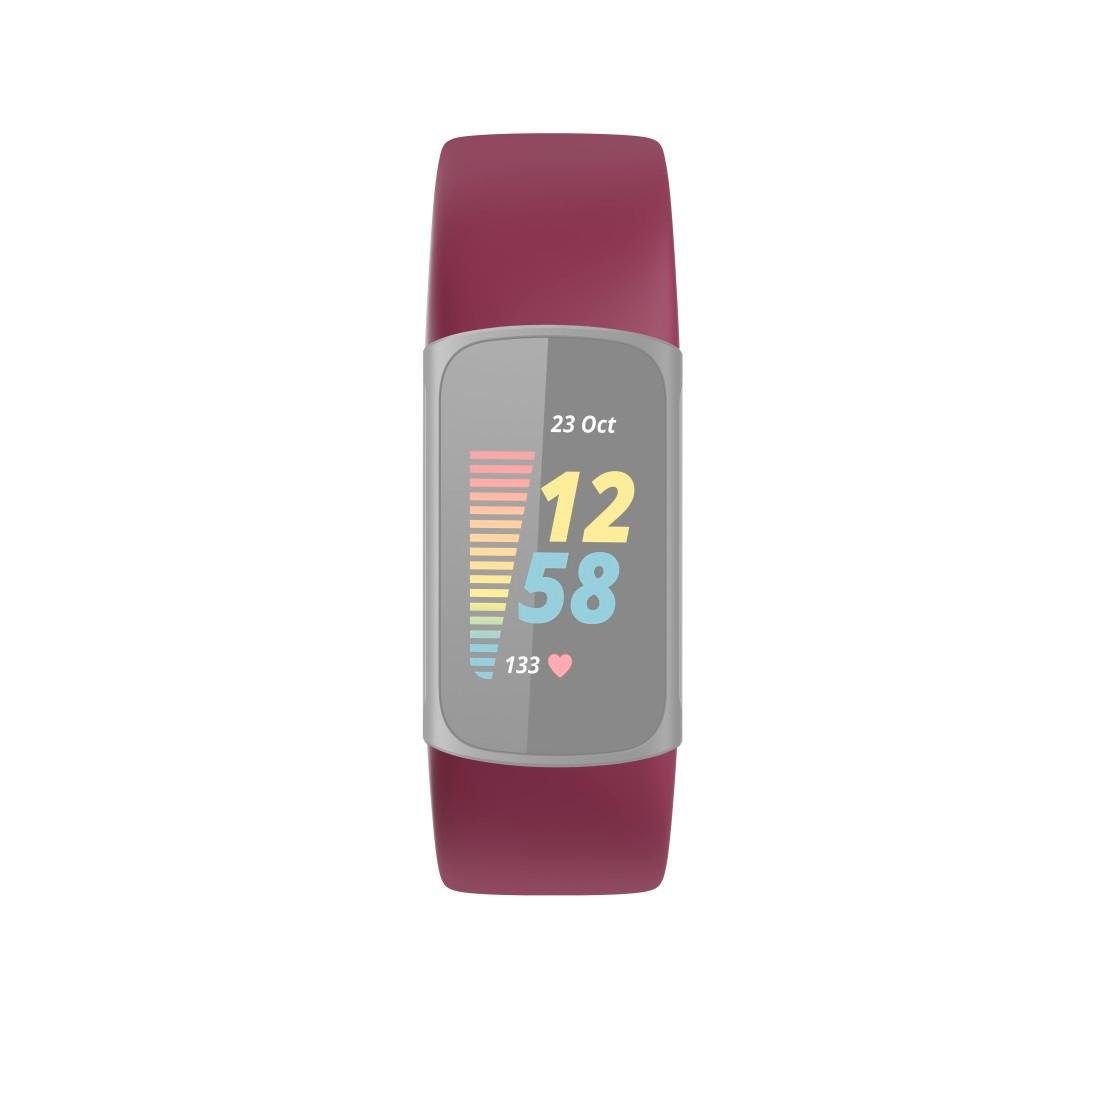 Smartwatch-Armband Fitbit zum bordeaux Armband Hama Charge für Tauschen, Uhrenarmband 5, universal